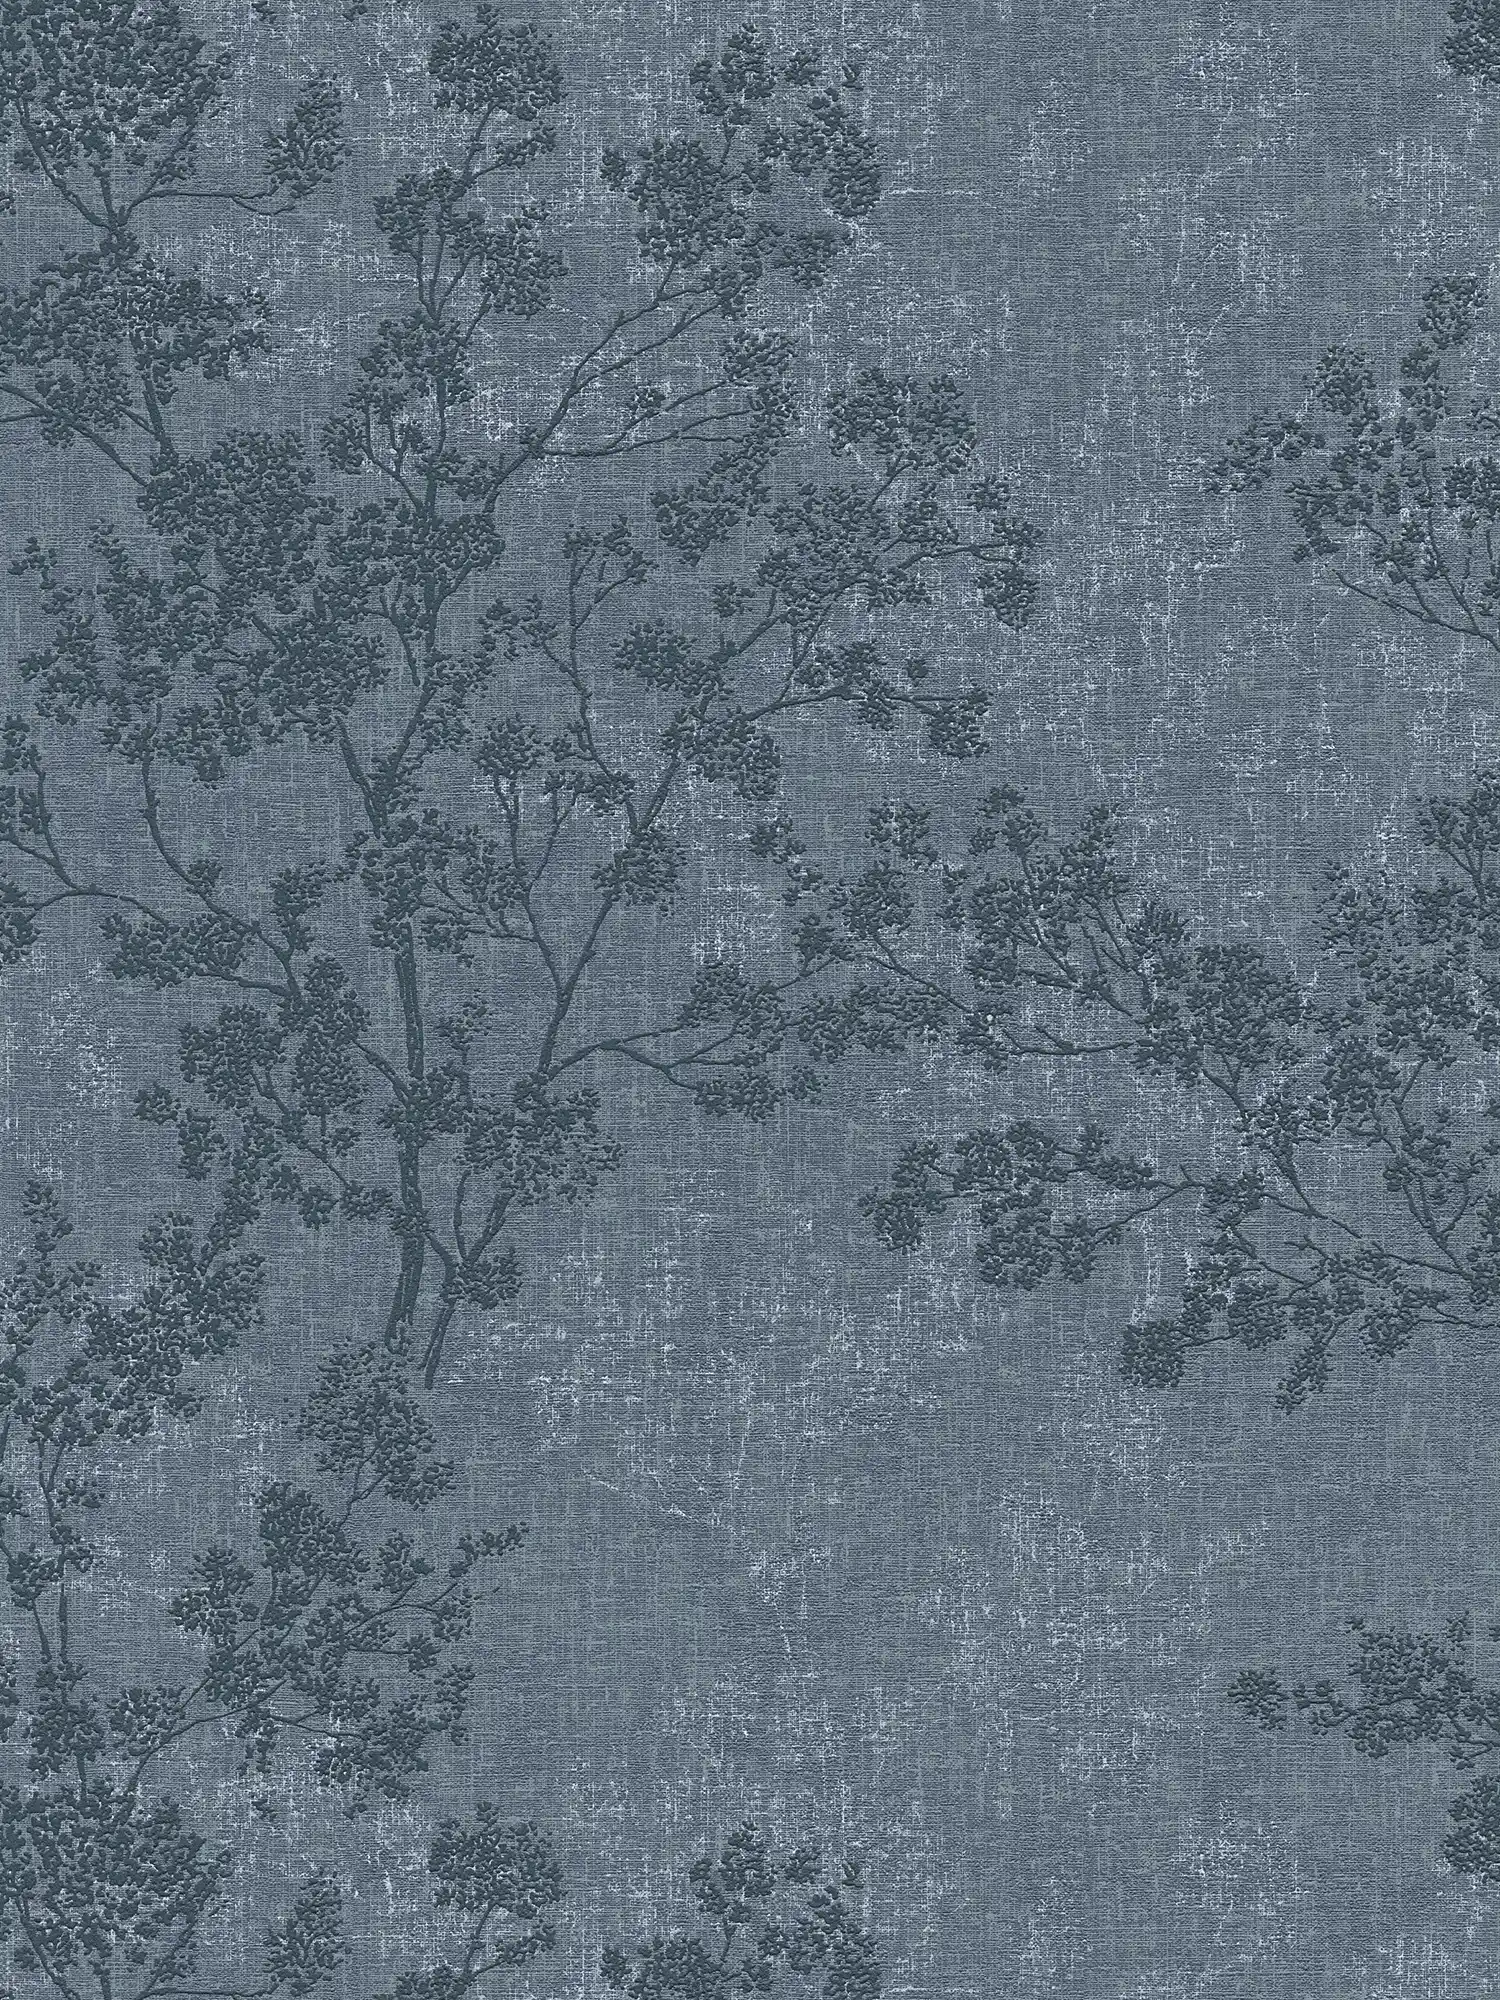         Tapete Blätter Muster in Leinen-Optik – Blau
    